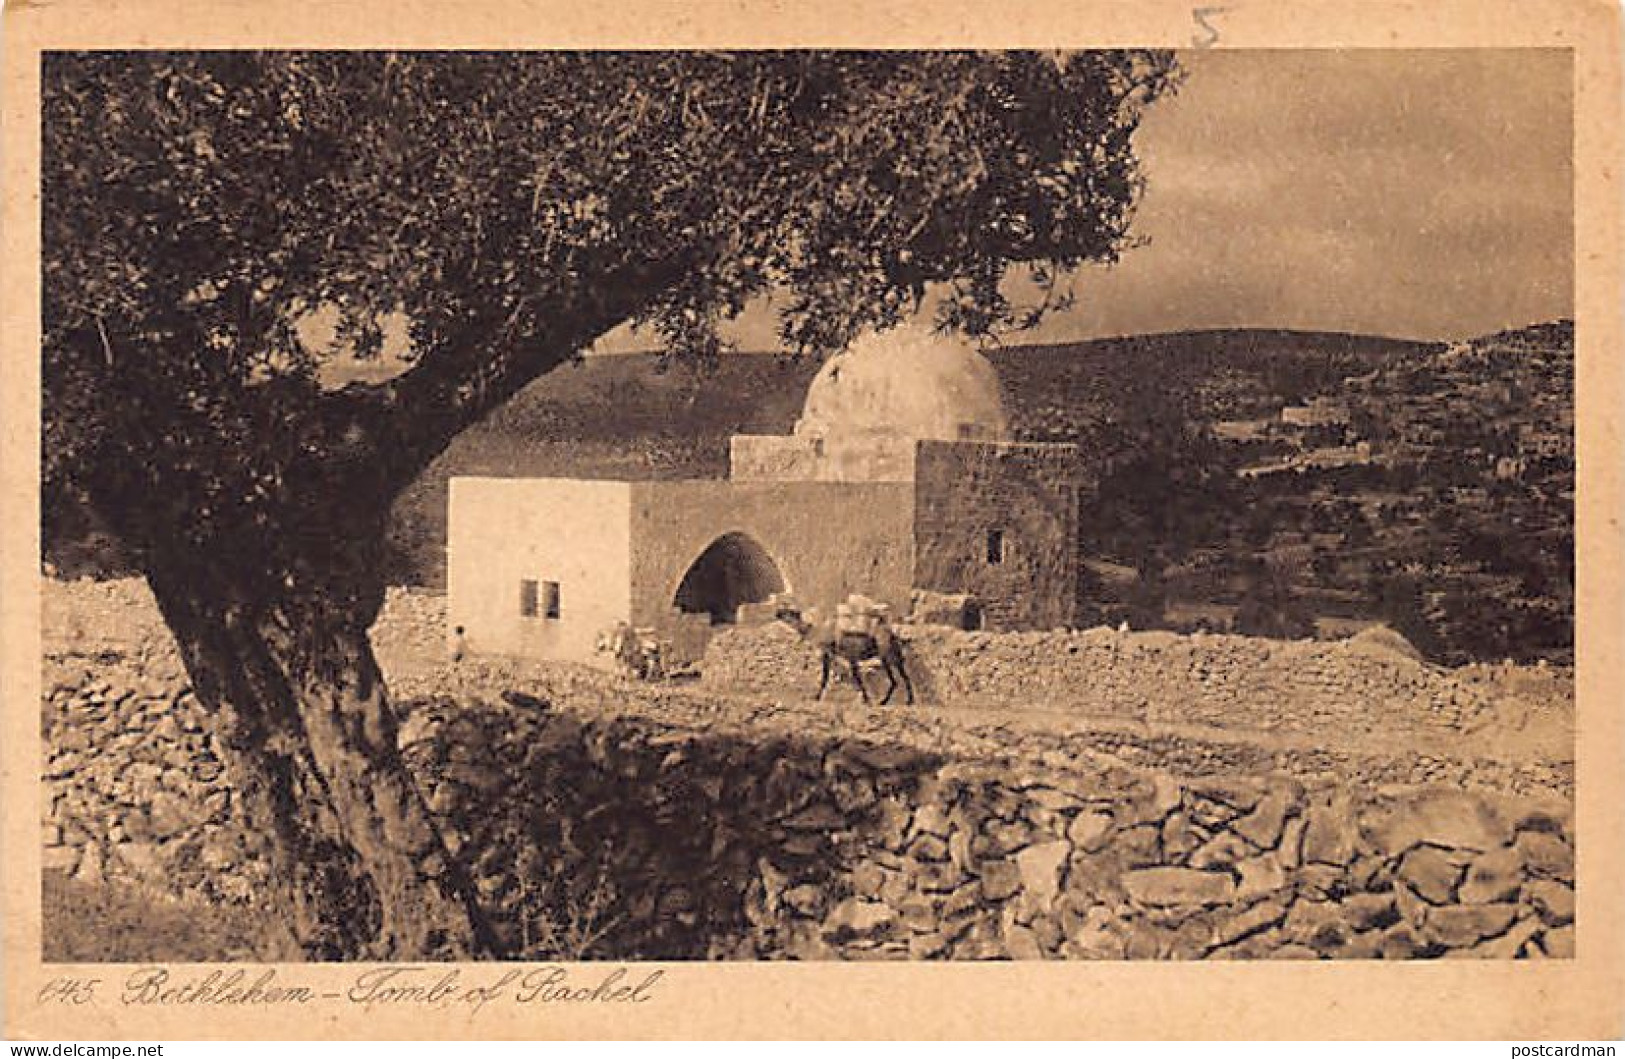 Palestine - BETHLEHEM - Tomb Of Rachel - Publ. Lehnert & Landrock 645 - Palestine